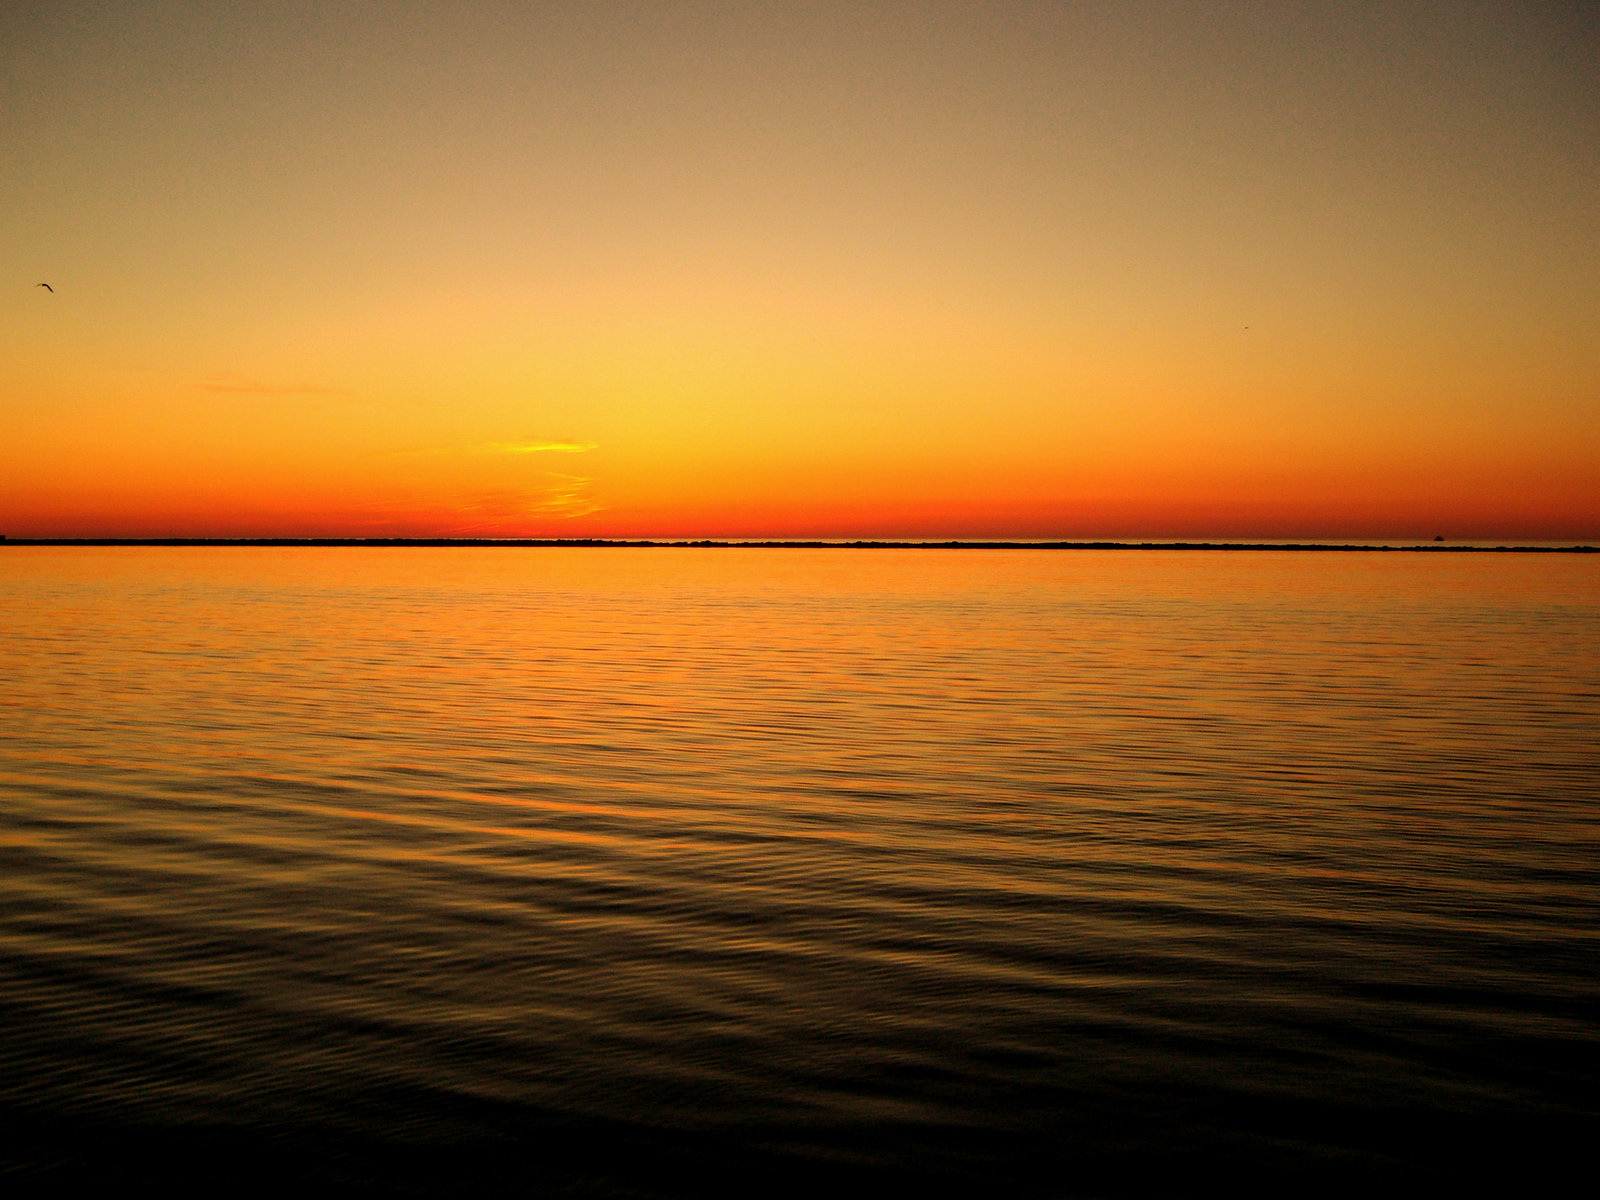 Calm Sunset by JustMarDesign on DeviantArt